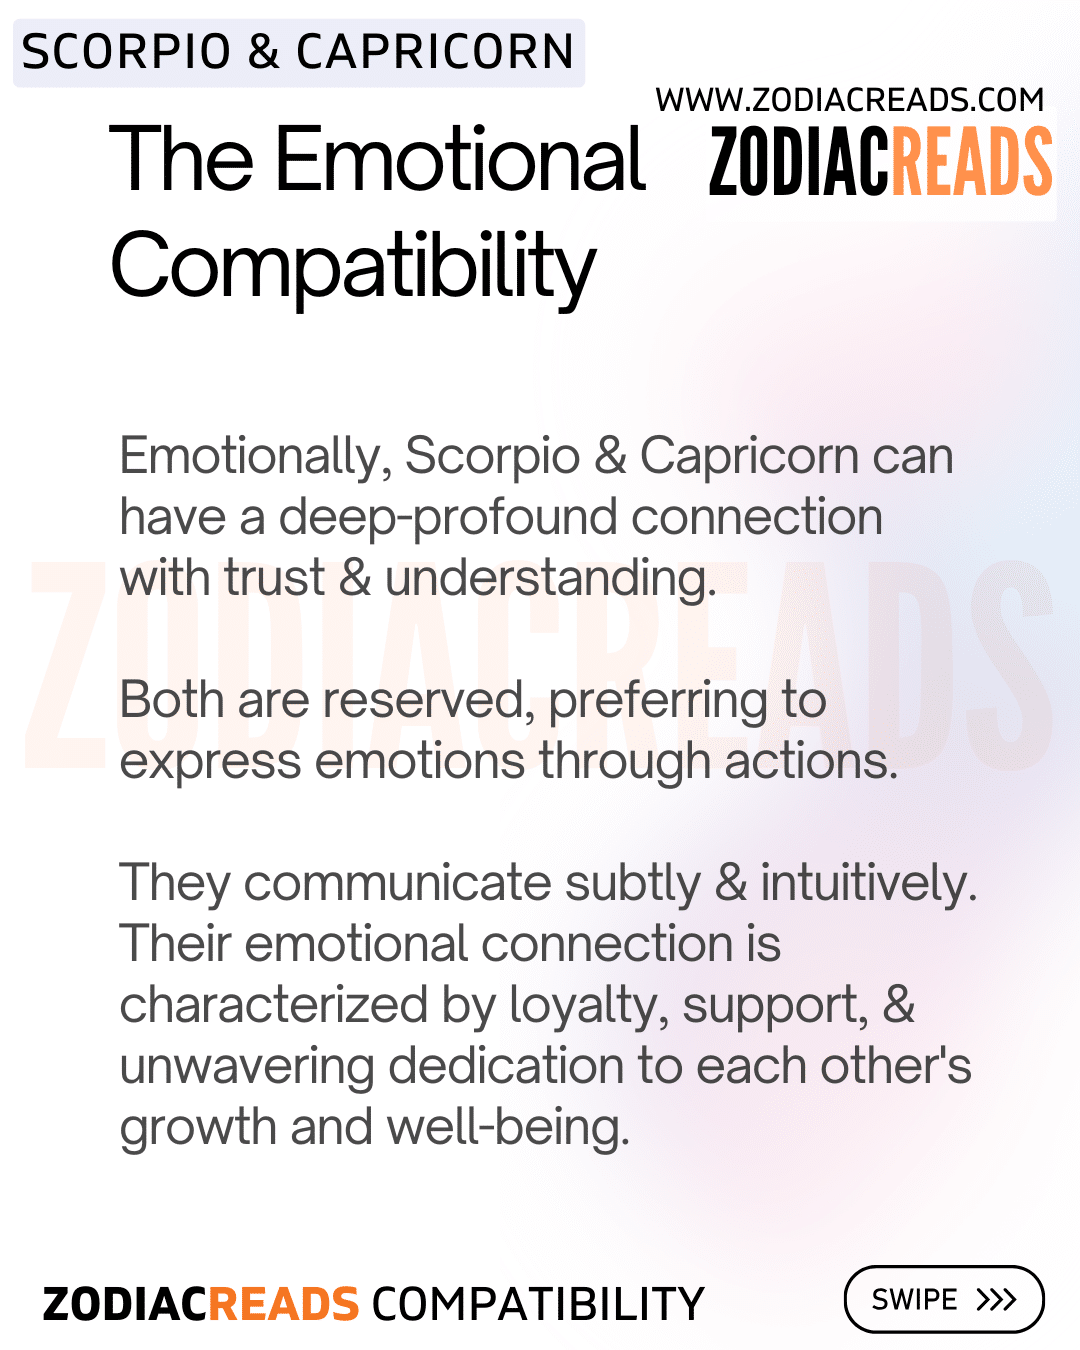 Emotional Compatibility of Scorpio and Capricorn